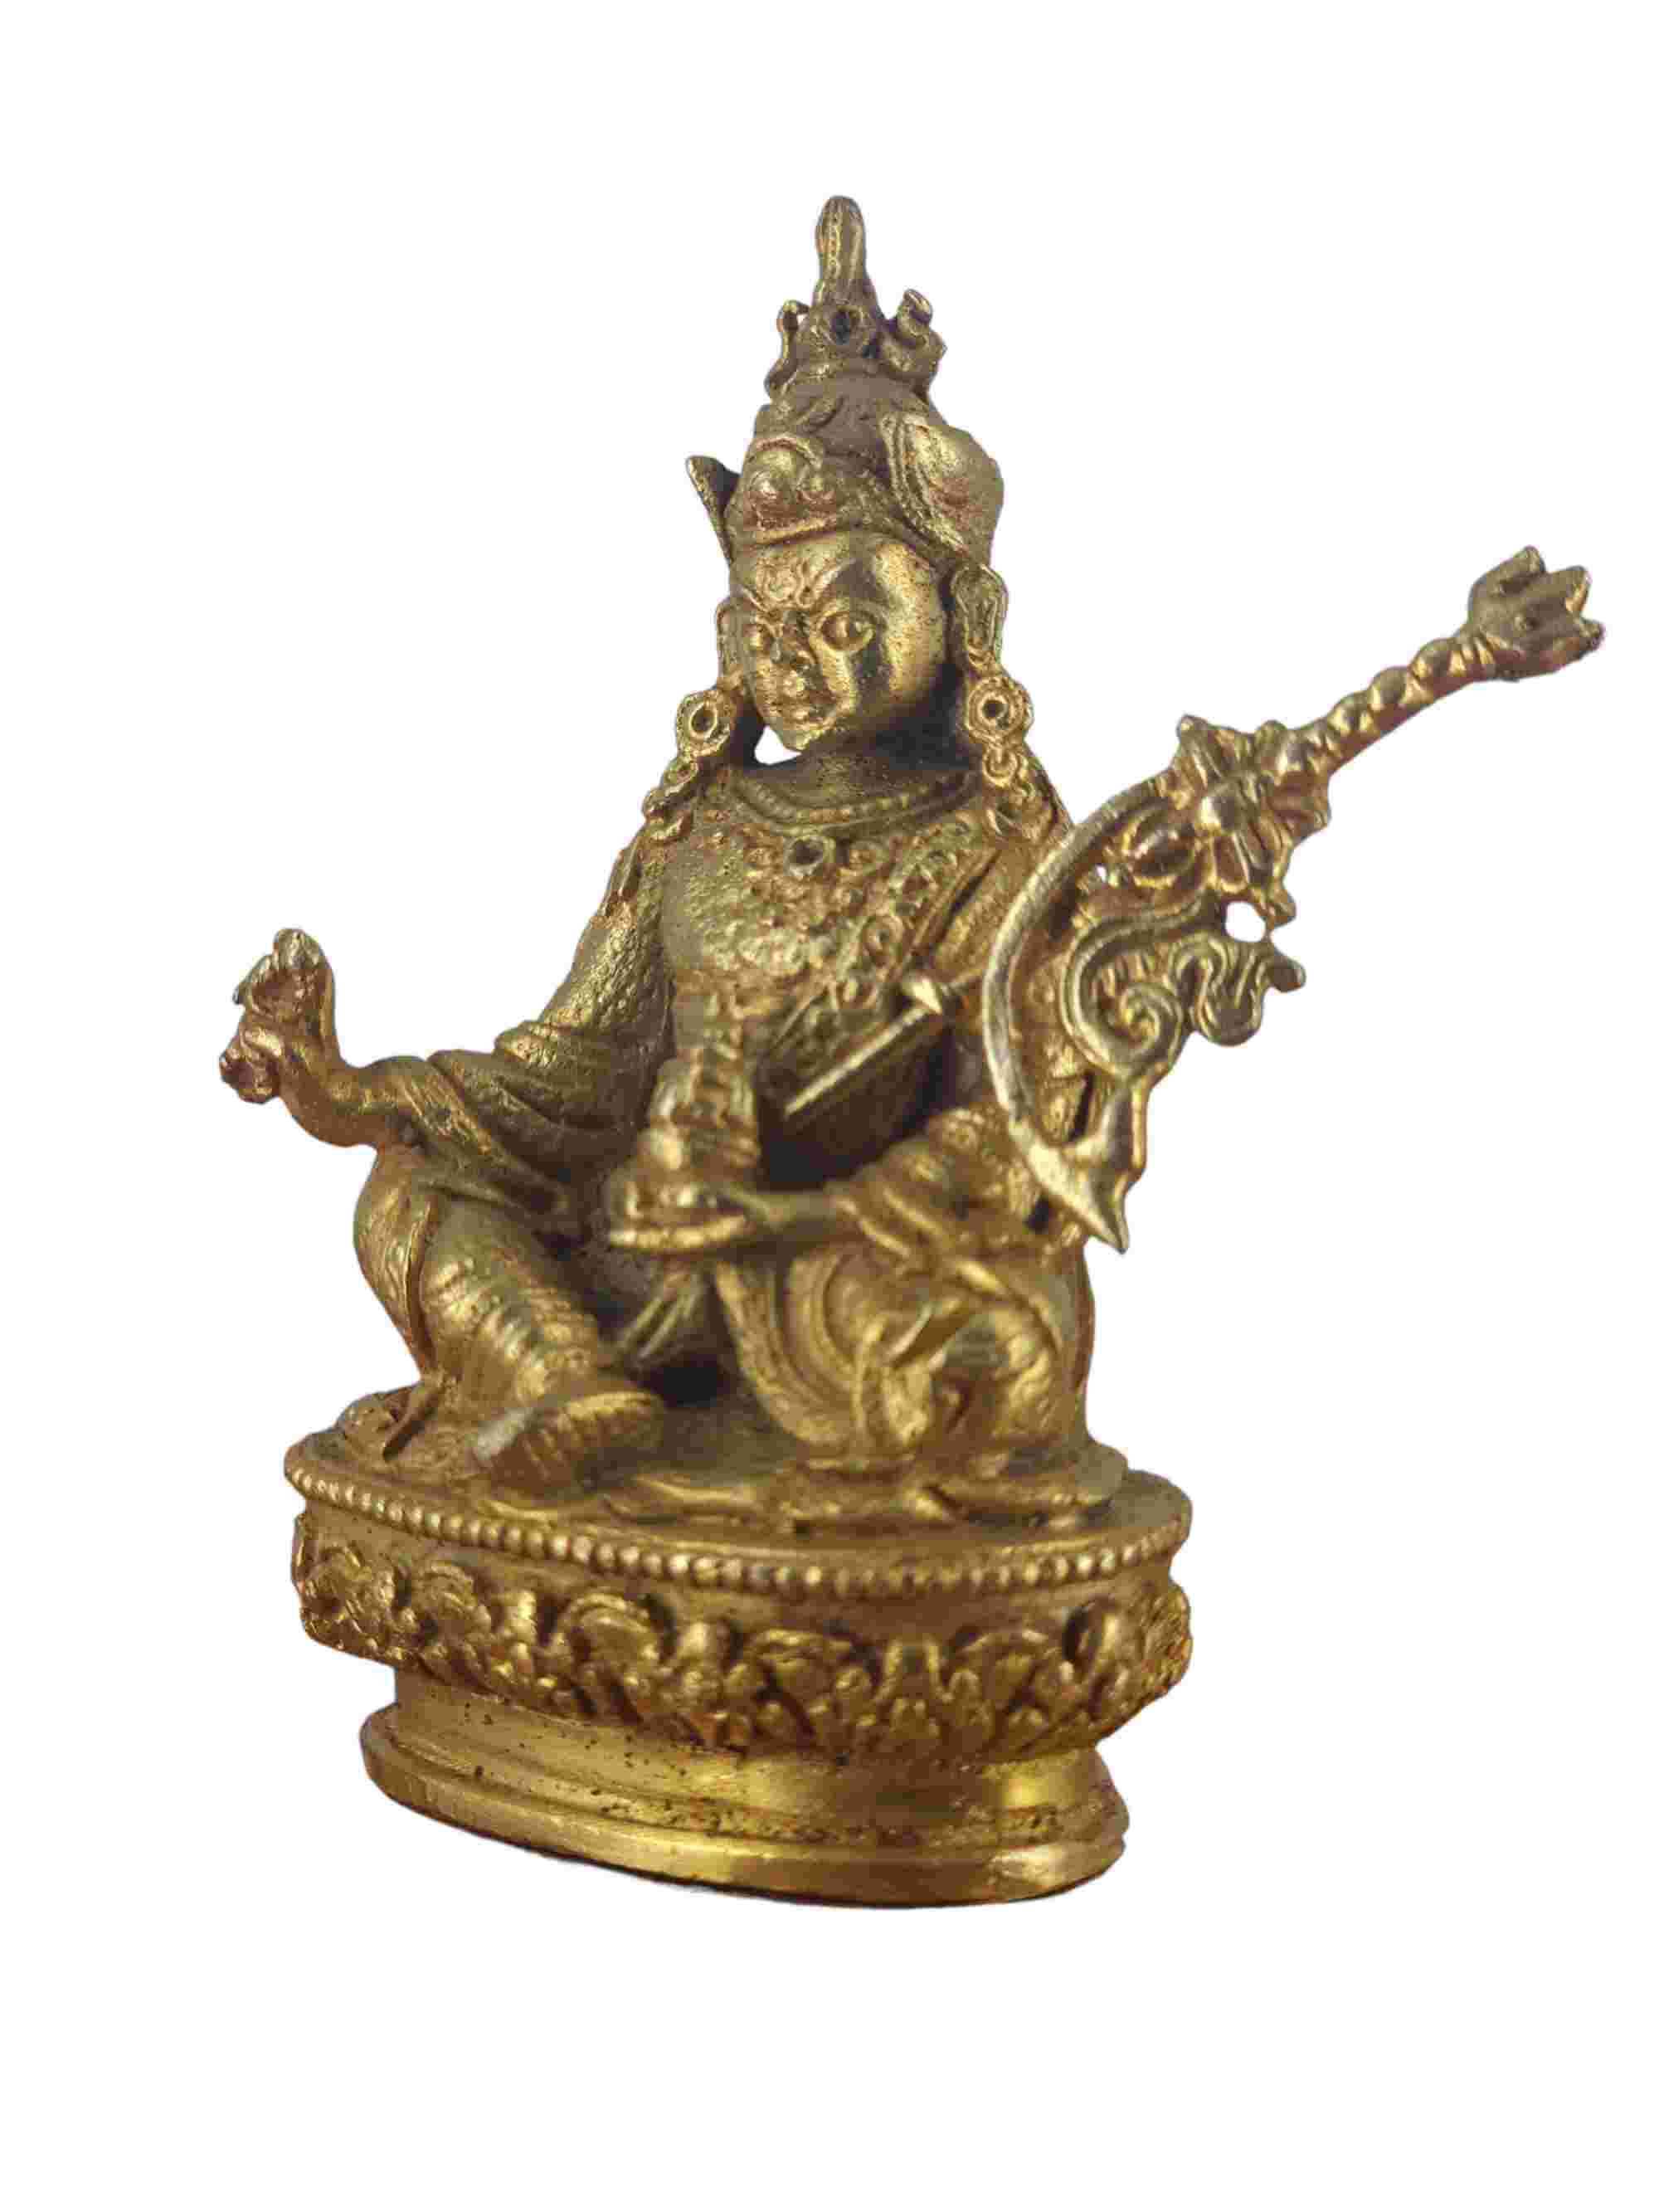 Buddhist Miniature Statue Of Padmasambhava guru Rinpoche, gold Plated